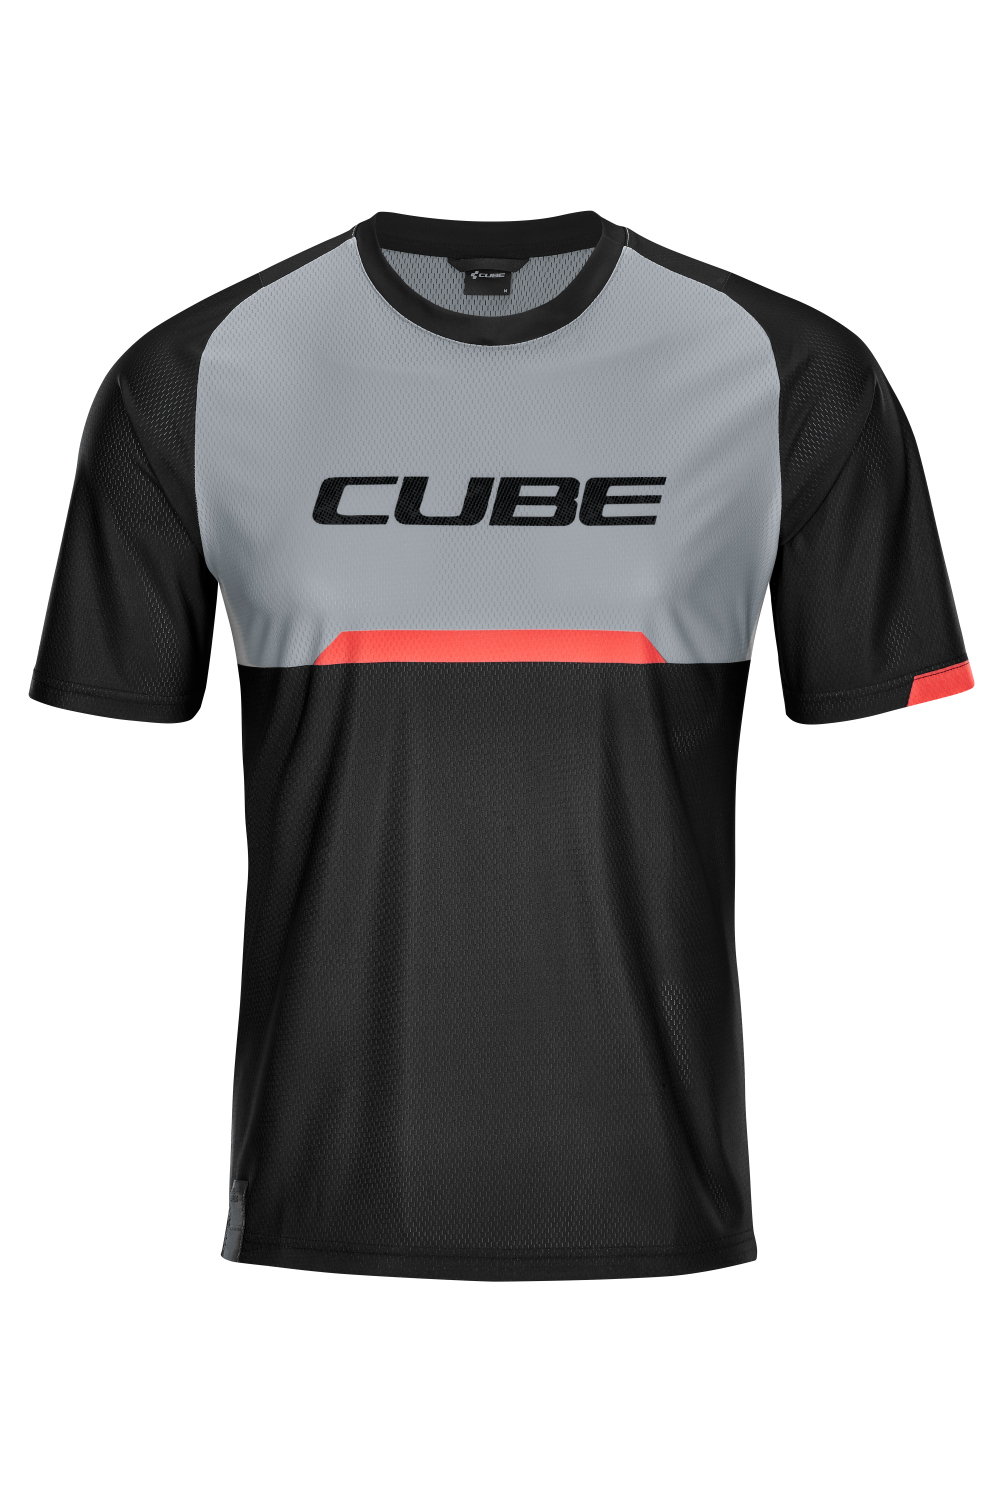 Cube Edge Shirt Korte Mouw Zwart/Grijs 2021